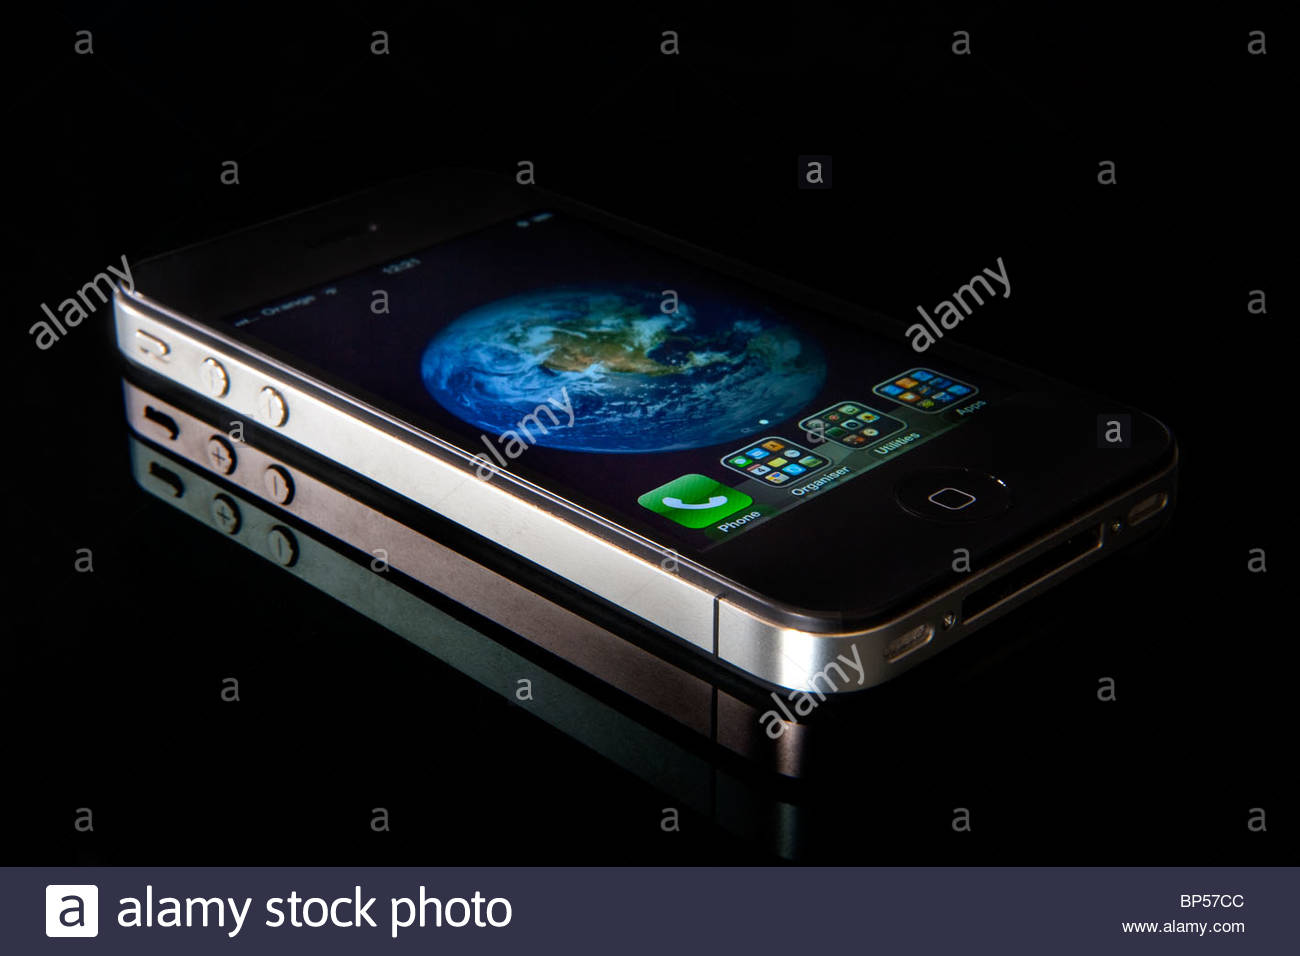 Apple Mac iPhone 4g On Black Background Stock Photo